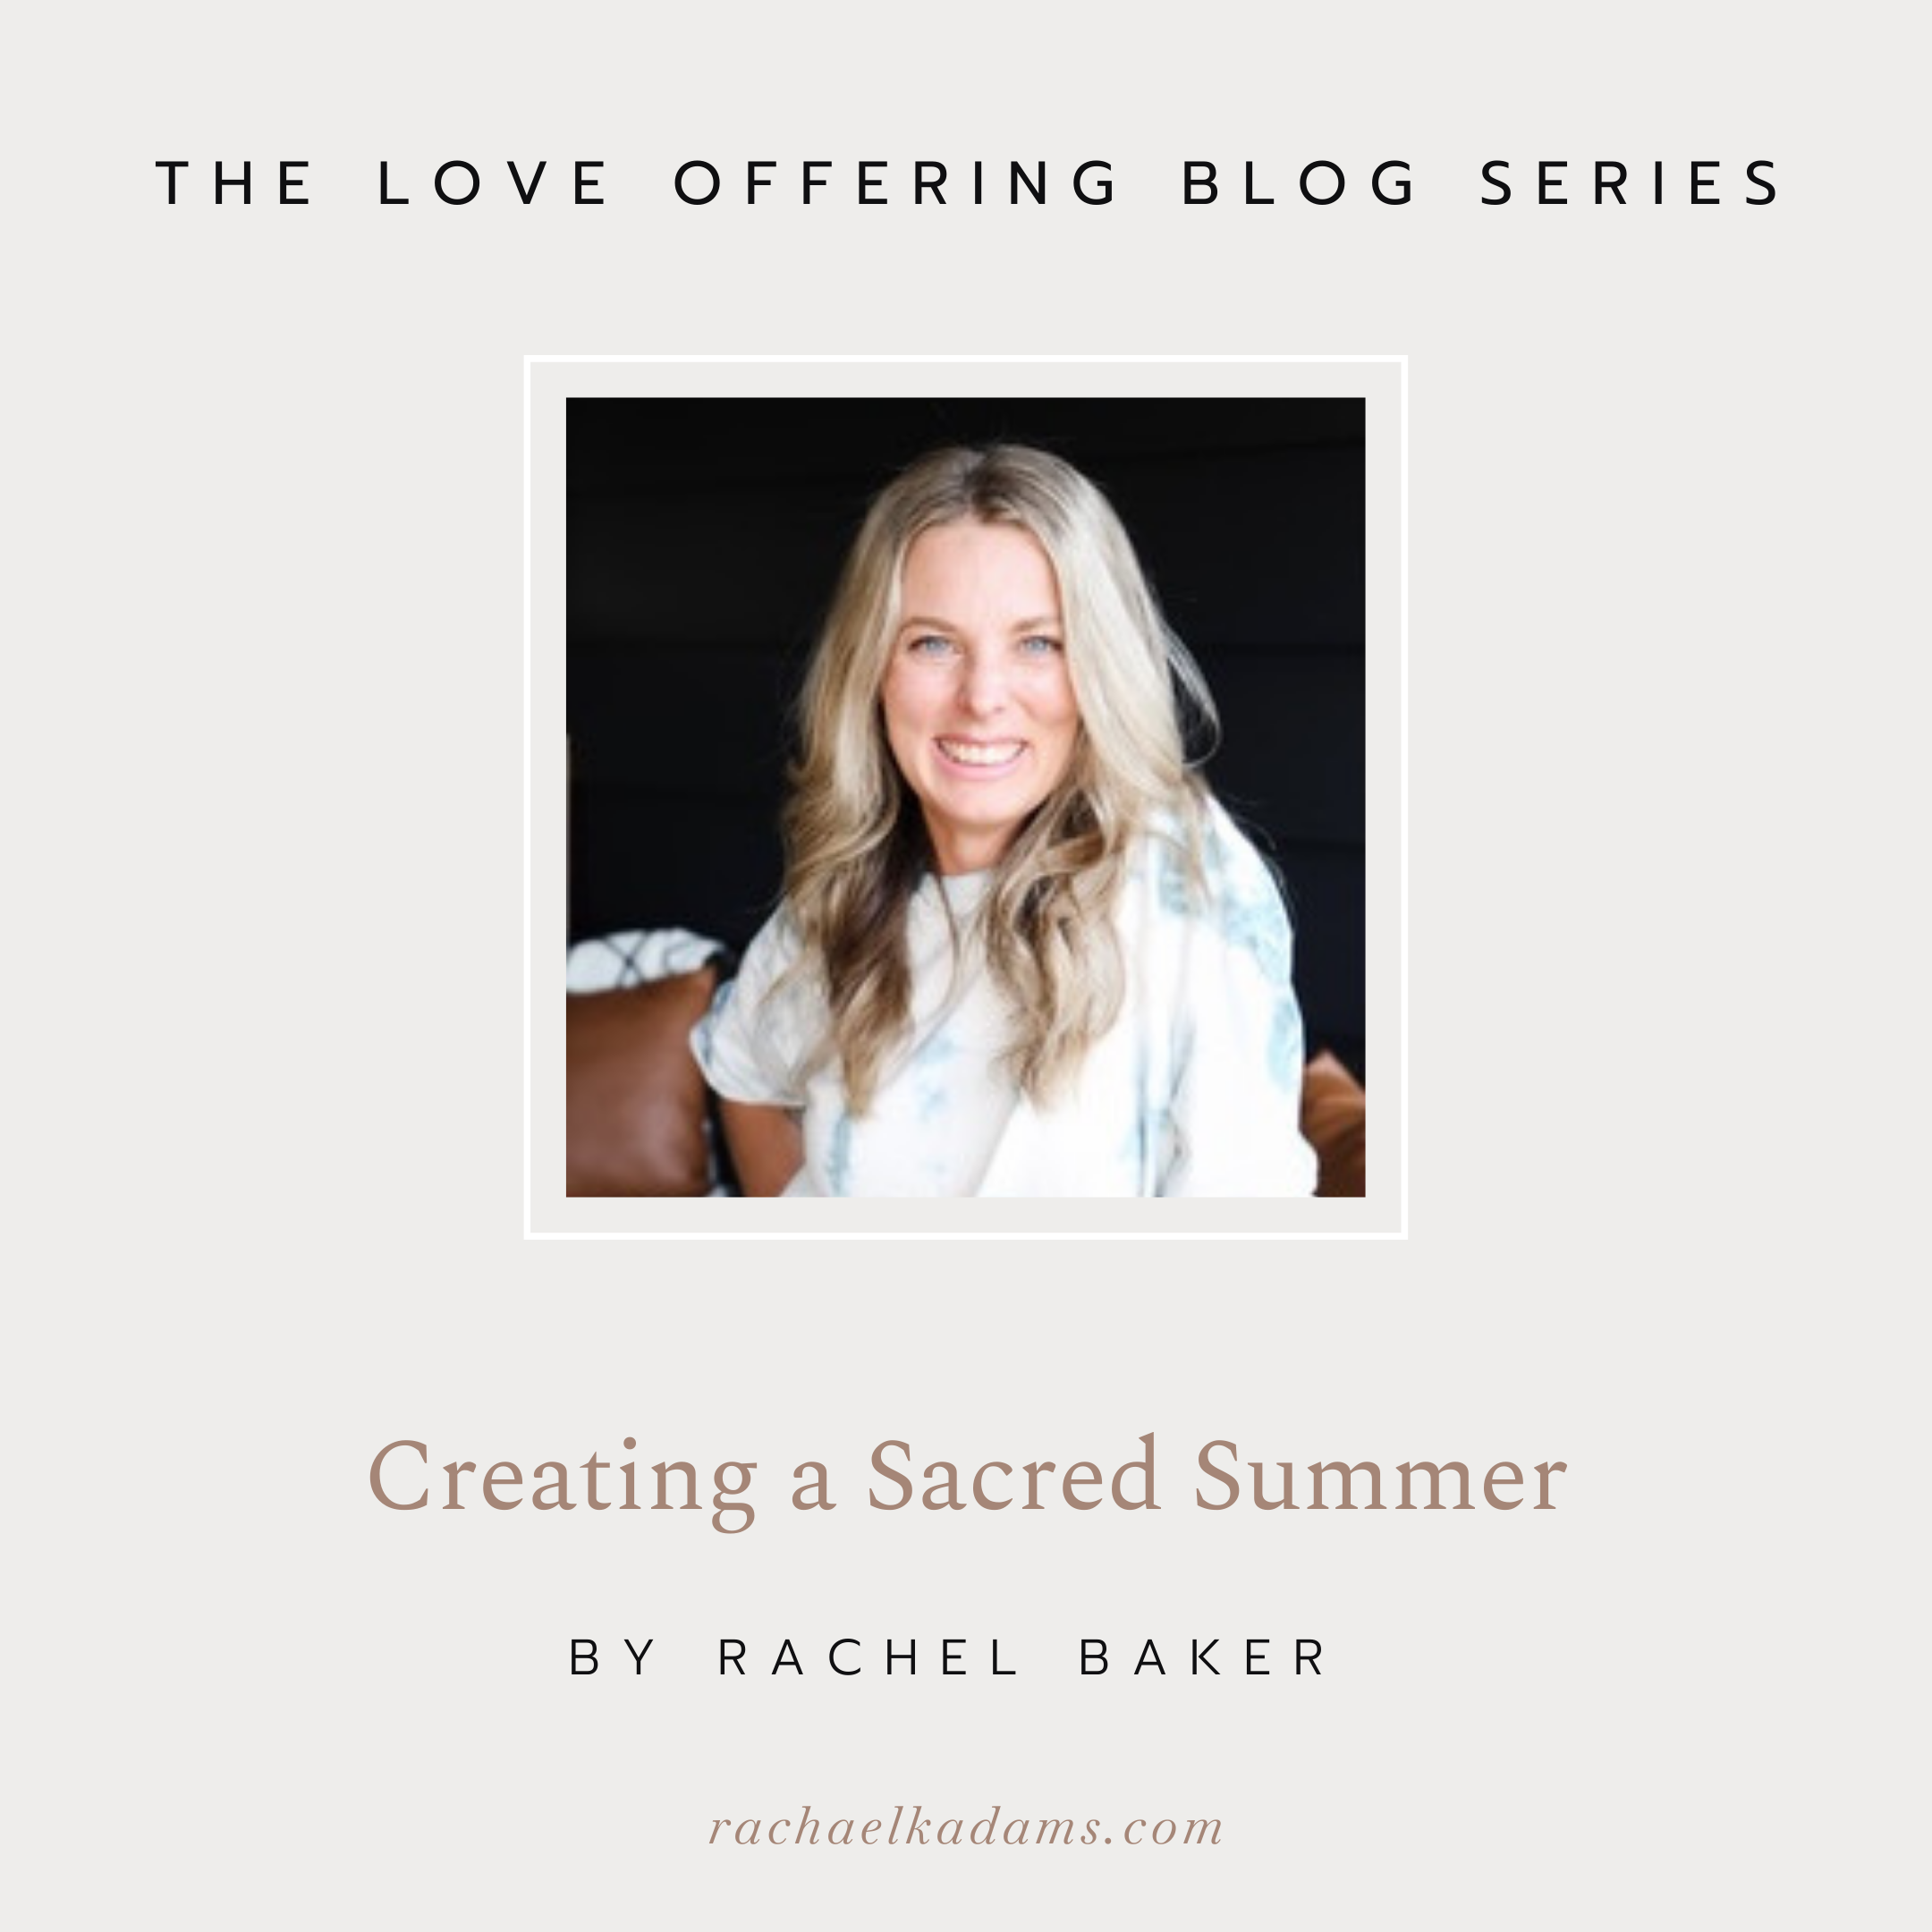 Creating a Sacred Summer by Rachel Baker